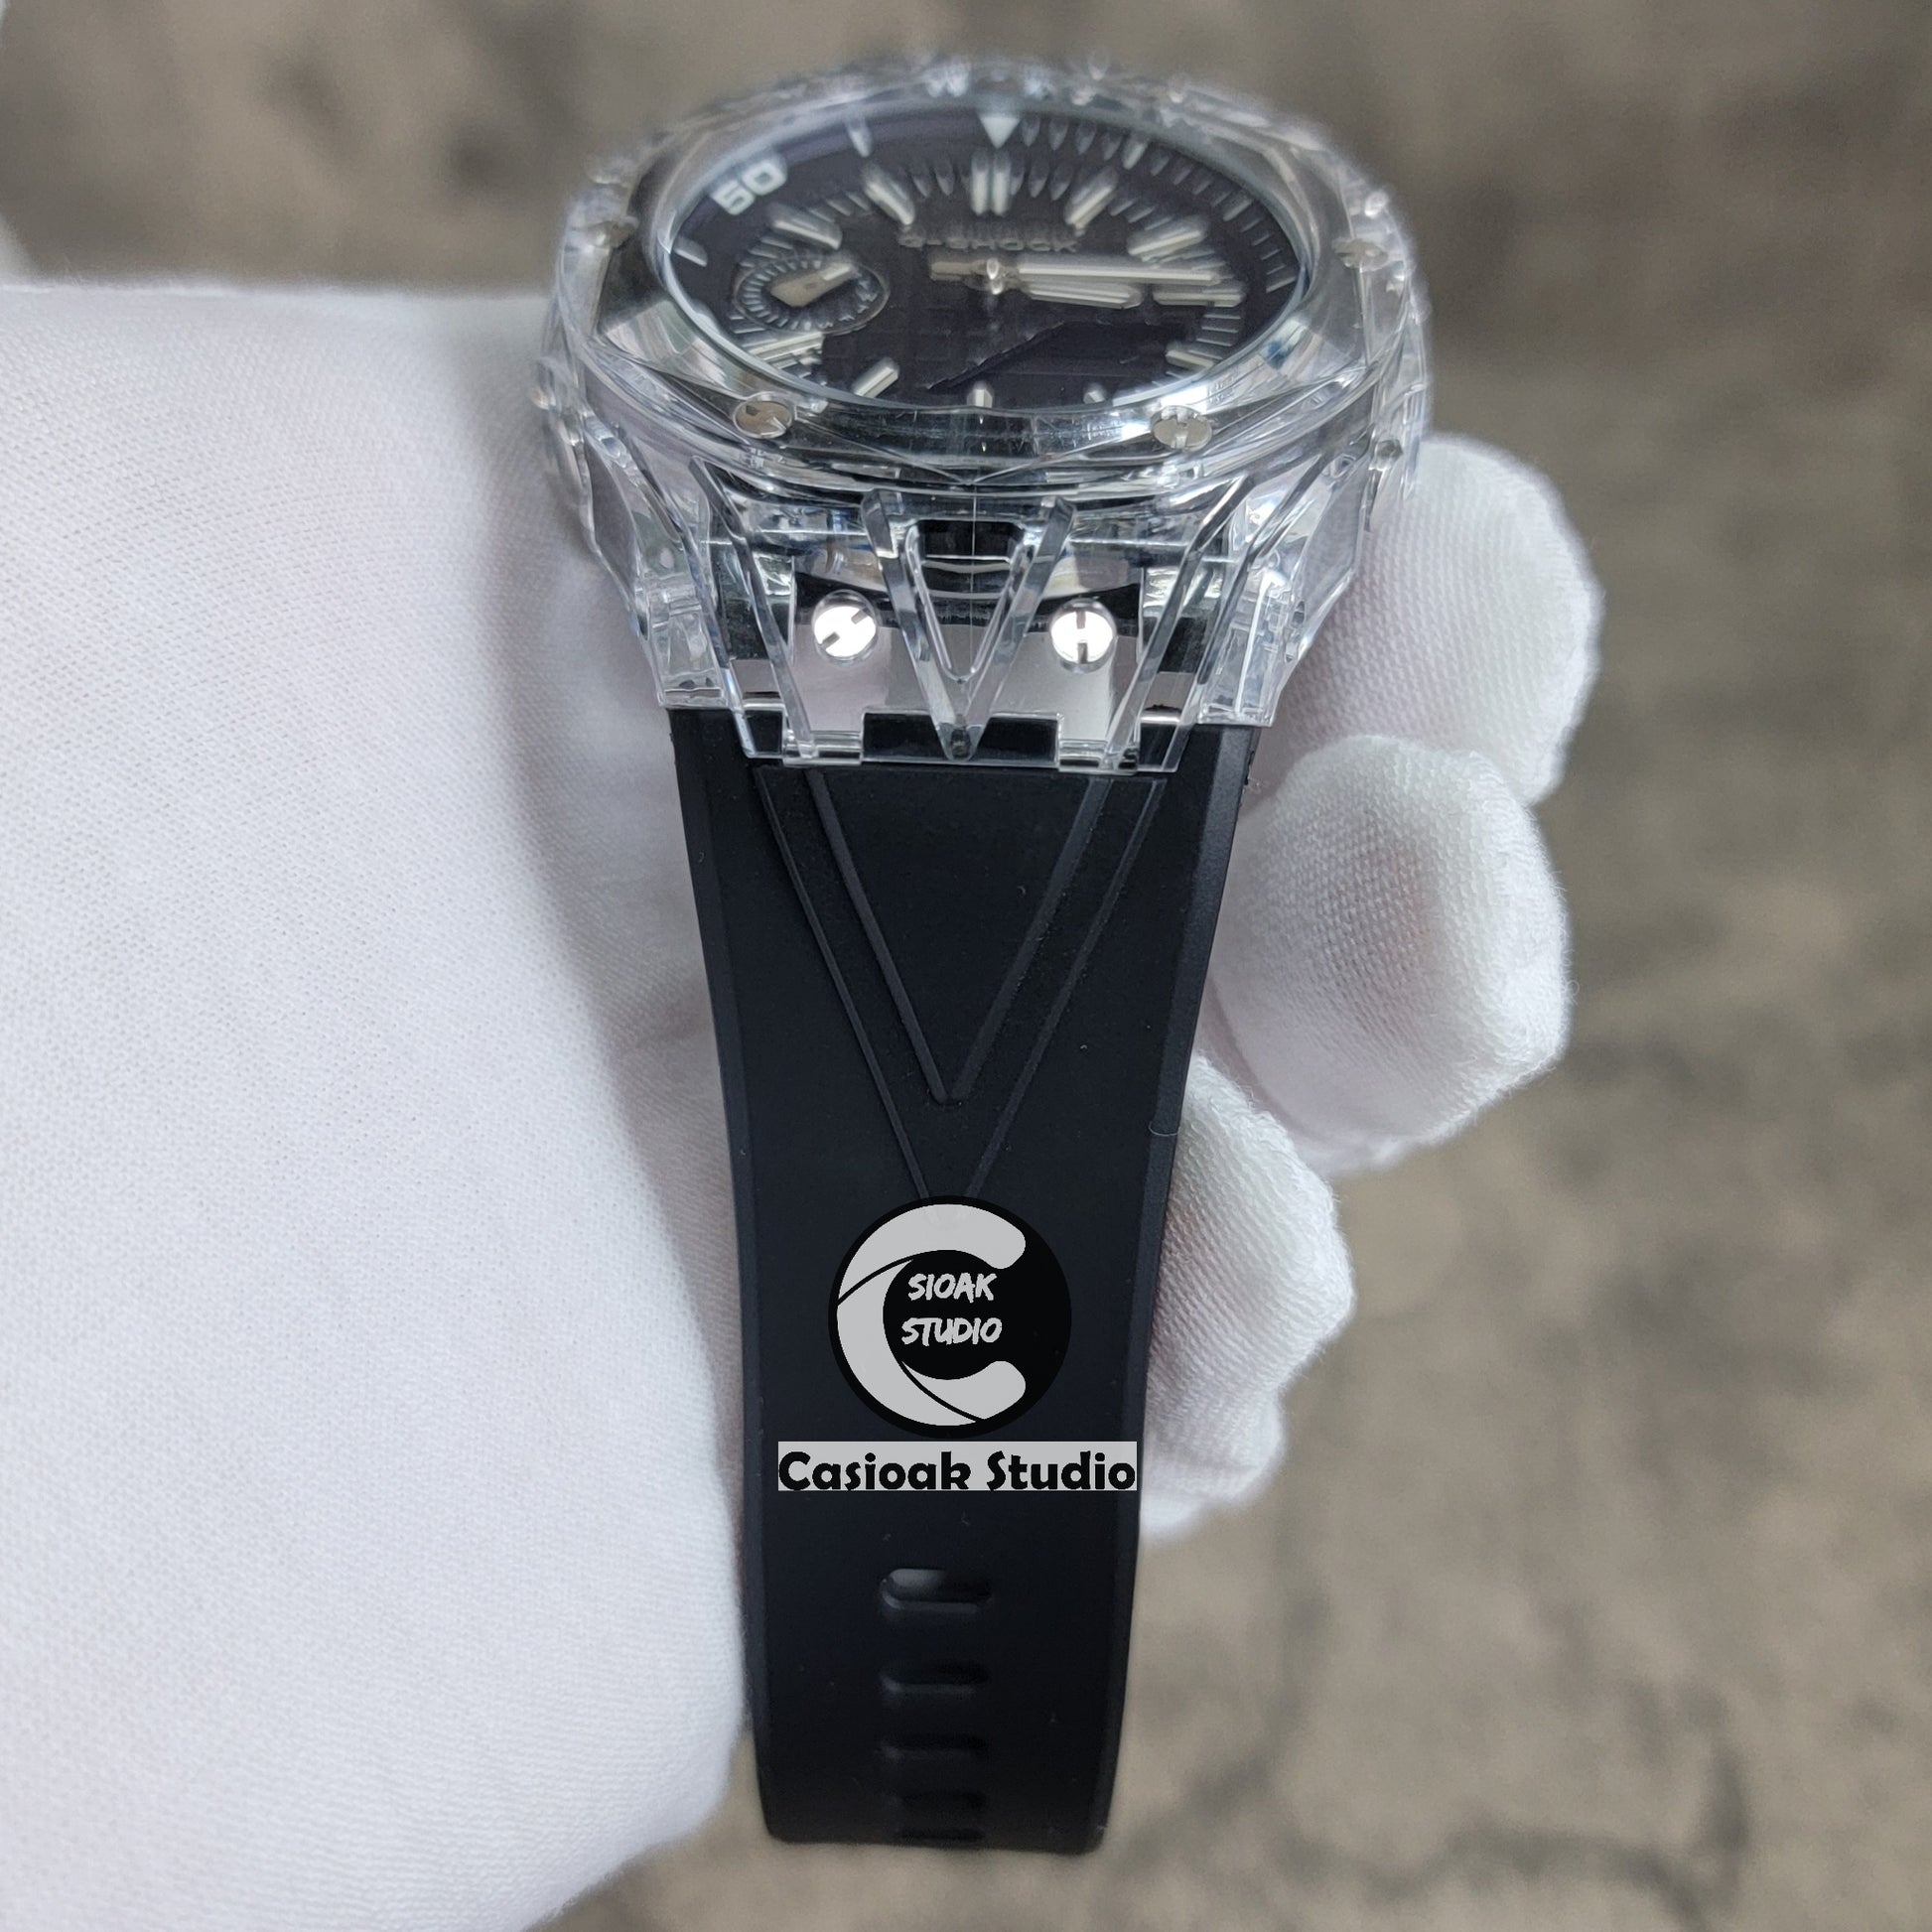 Casioak Mod Watch NEW Transparent Case Black Strap Silver Time Mark Black Dial 44mm - Casioak Studio